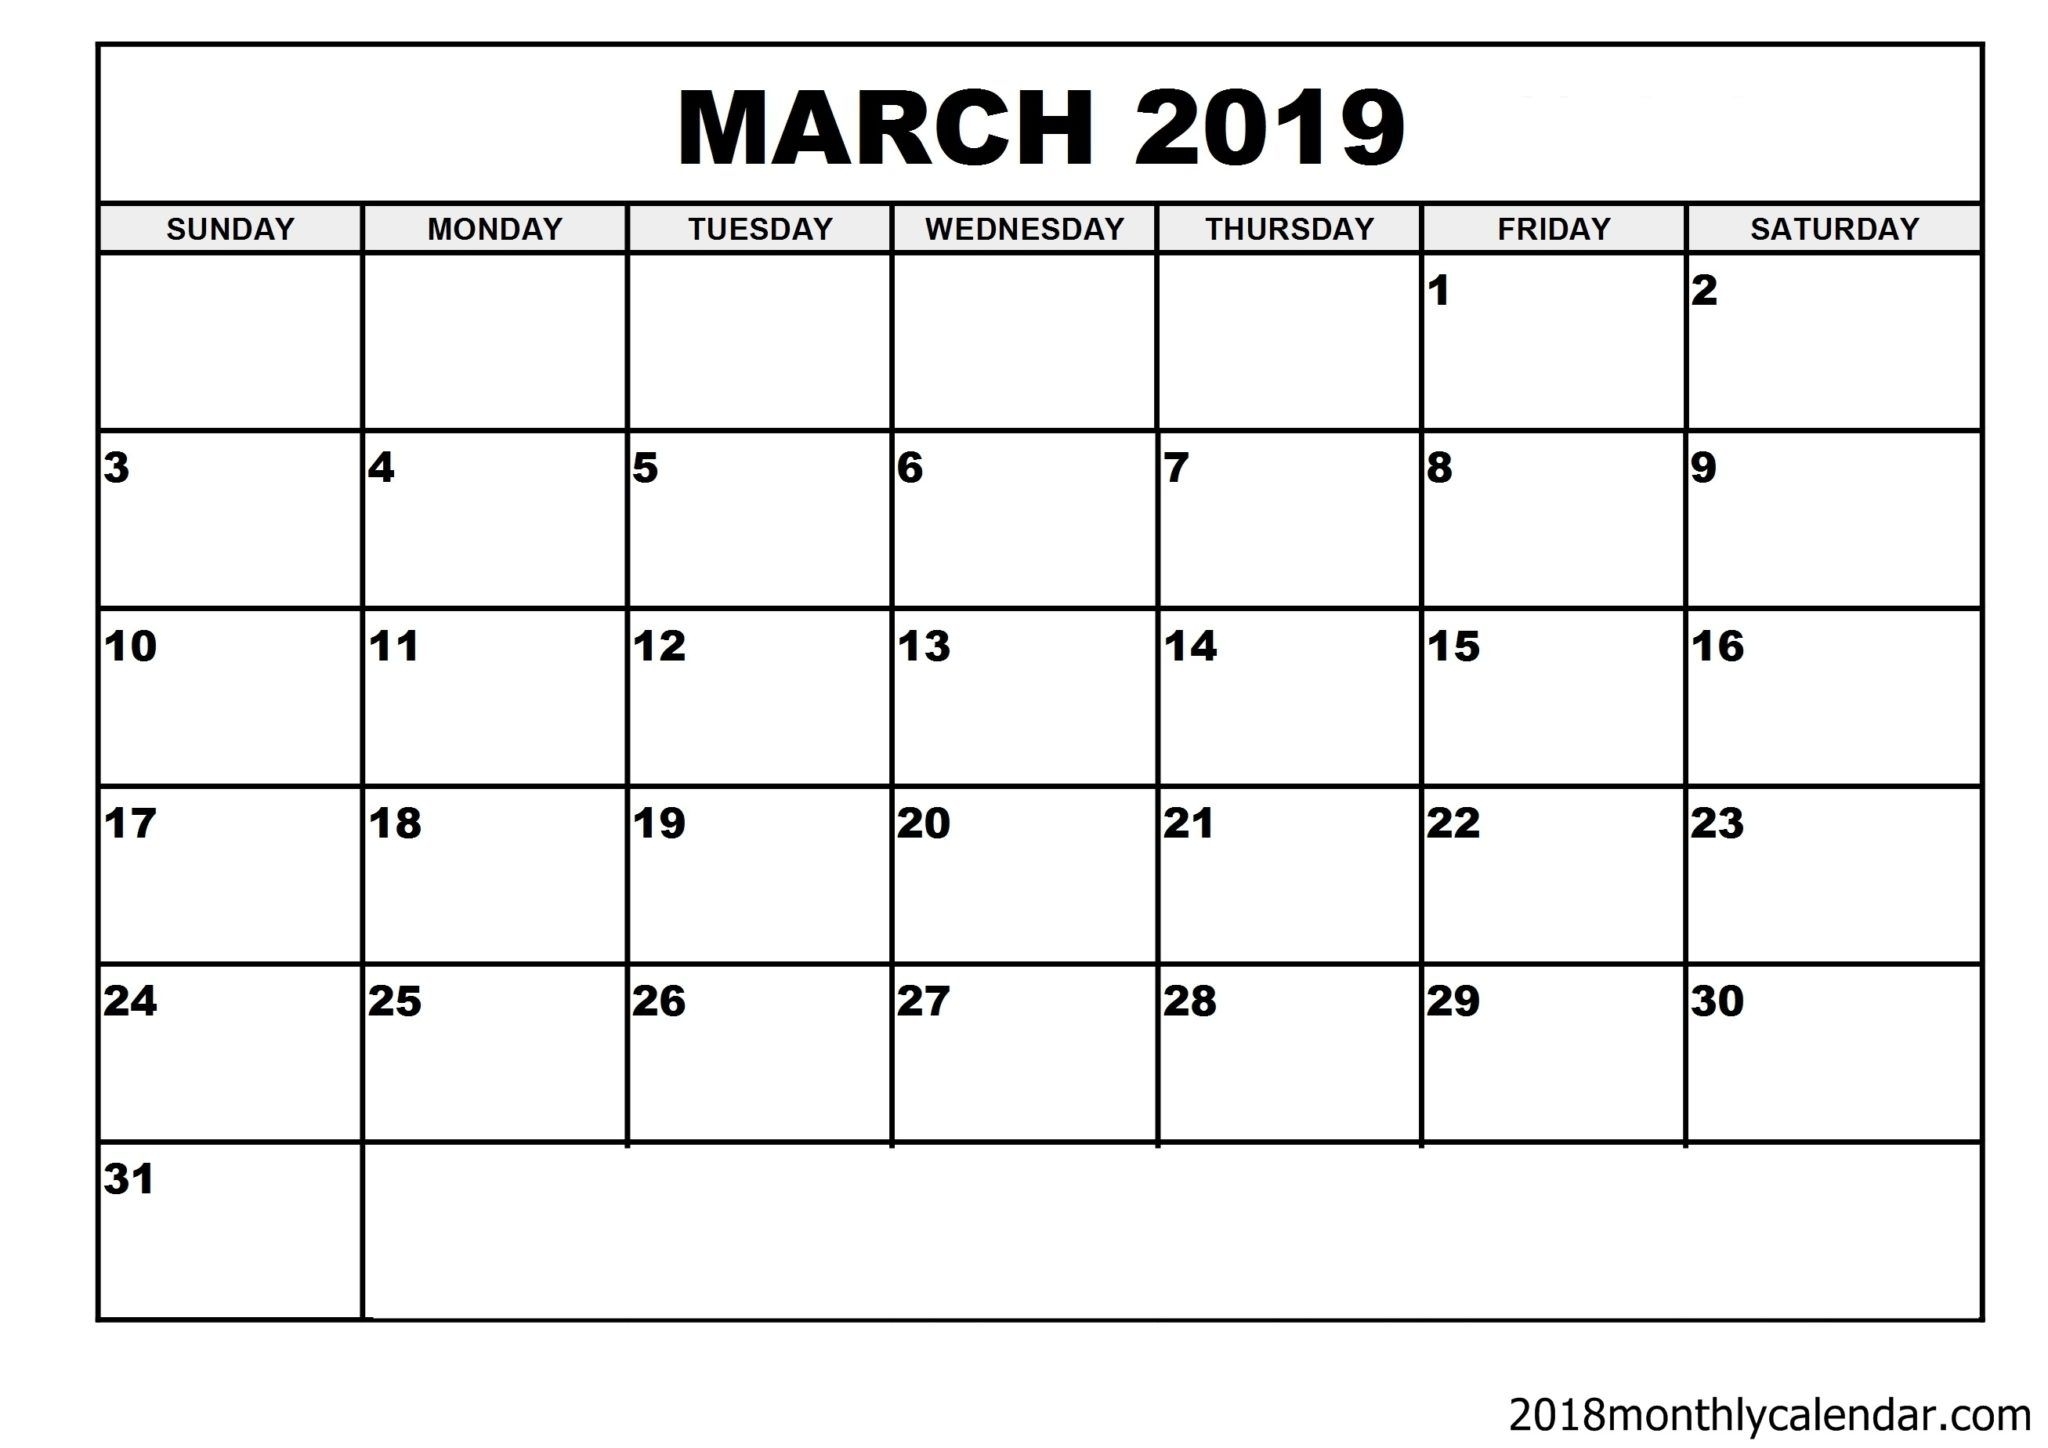 Download March 2019 Calendar – Blank Template - Editable Calendar for Print Blank Calendar Month By Month